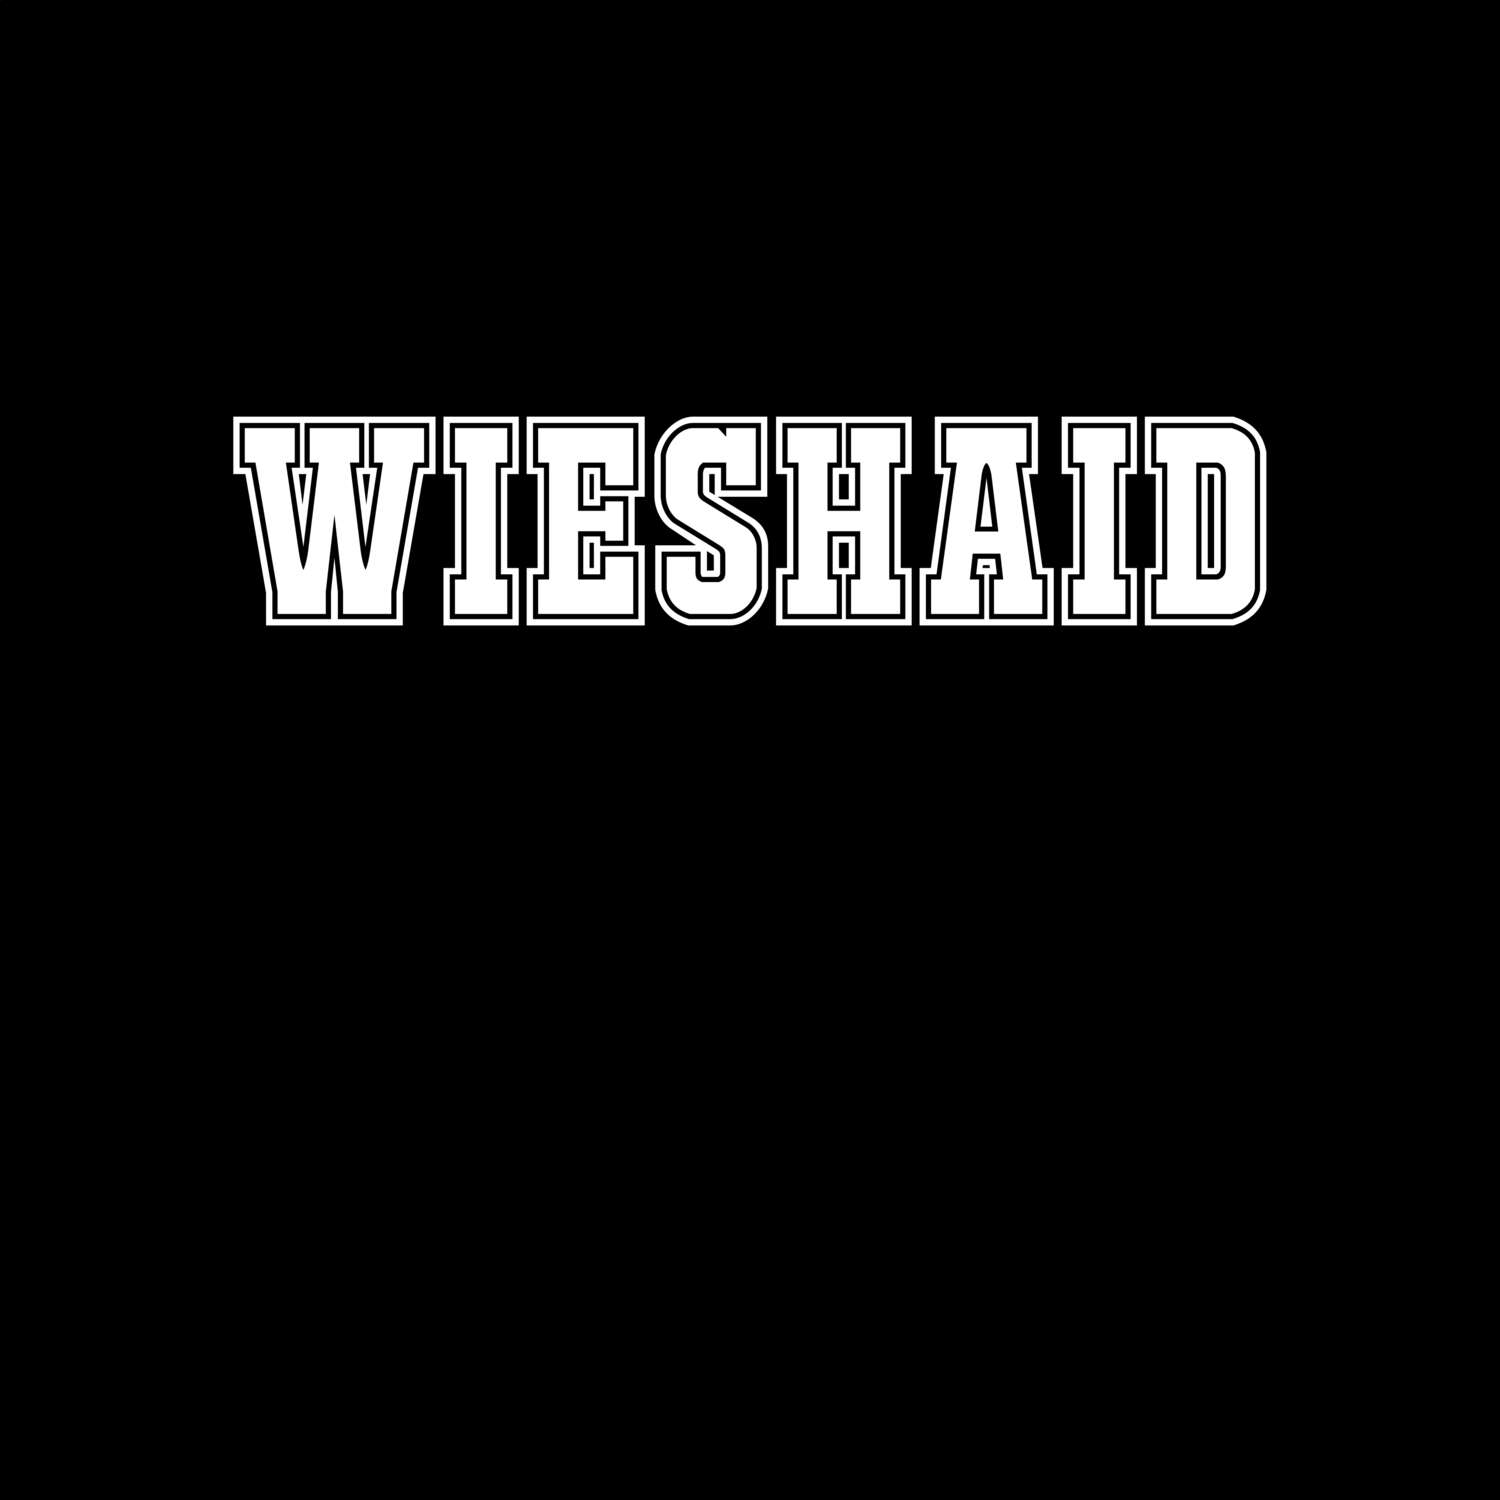 Wieshaid T-Shirt »Classic«